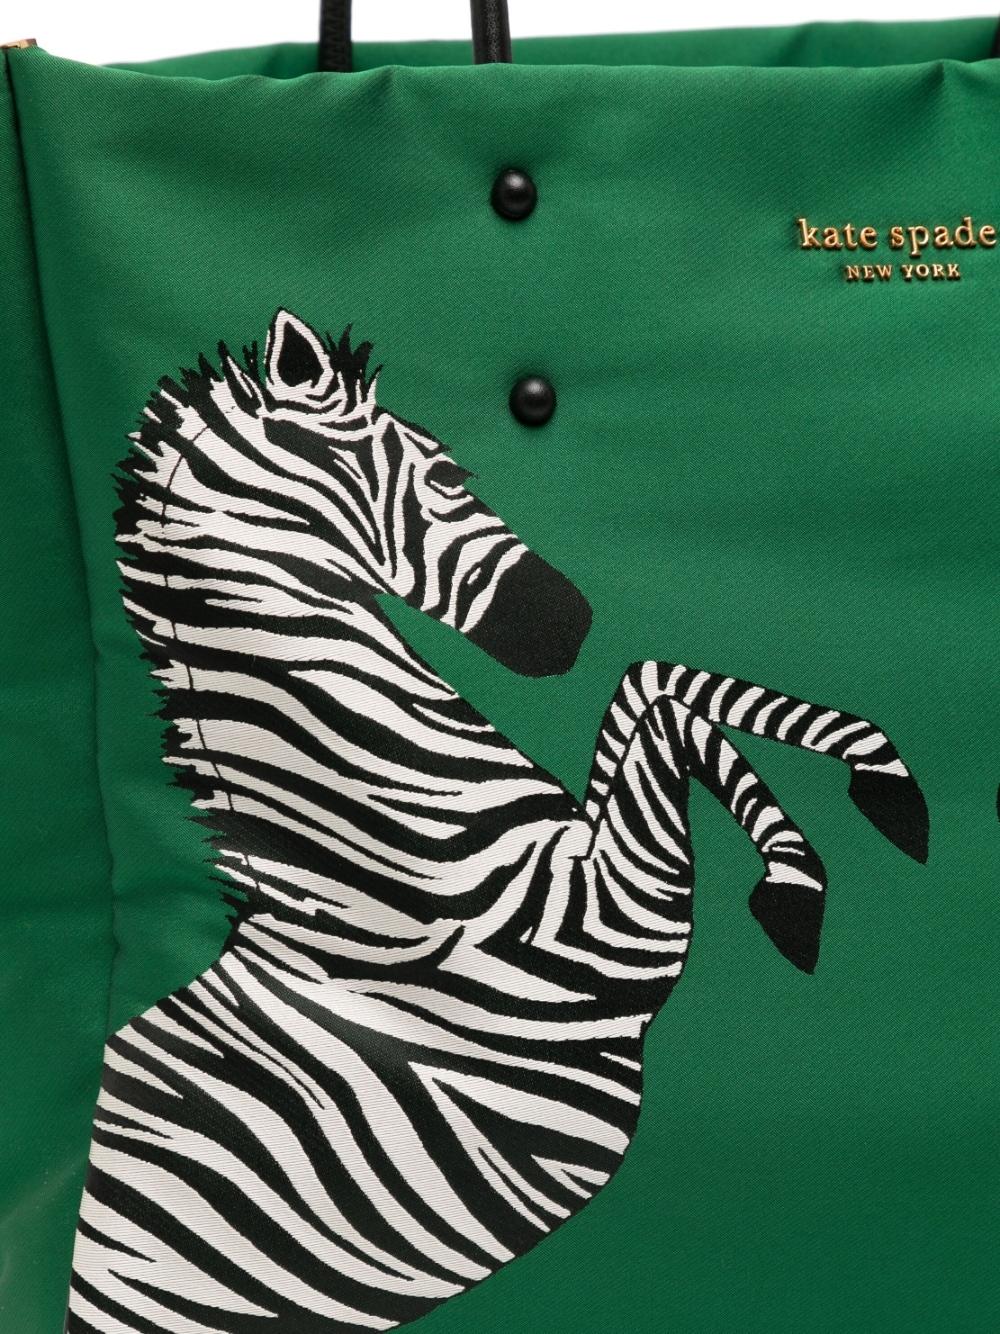 Kate Spade Bags for Women - Shop on FARFETCH